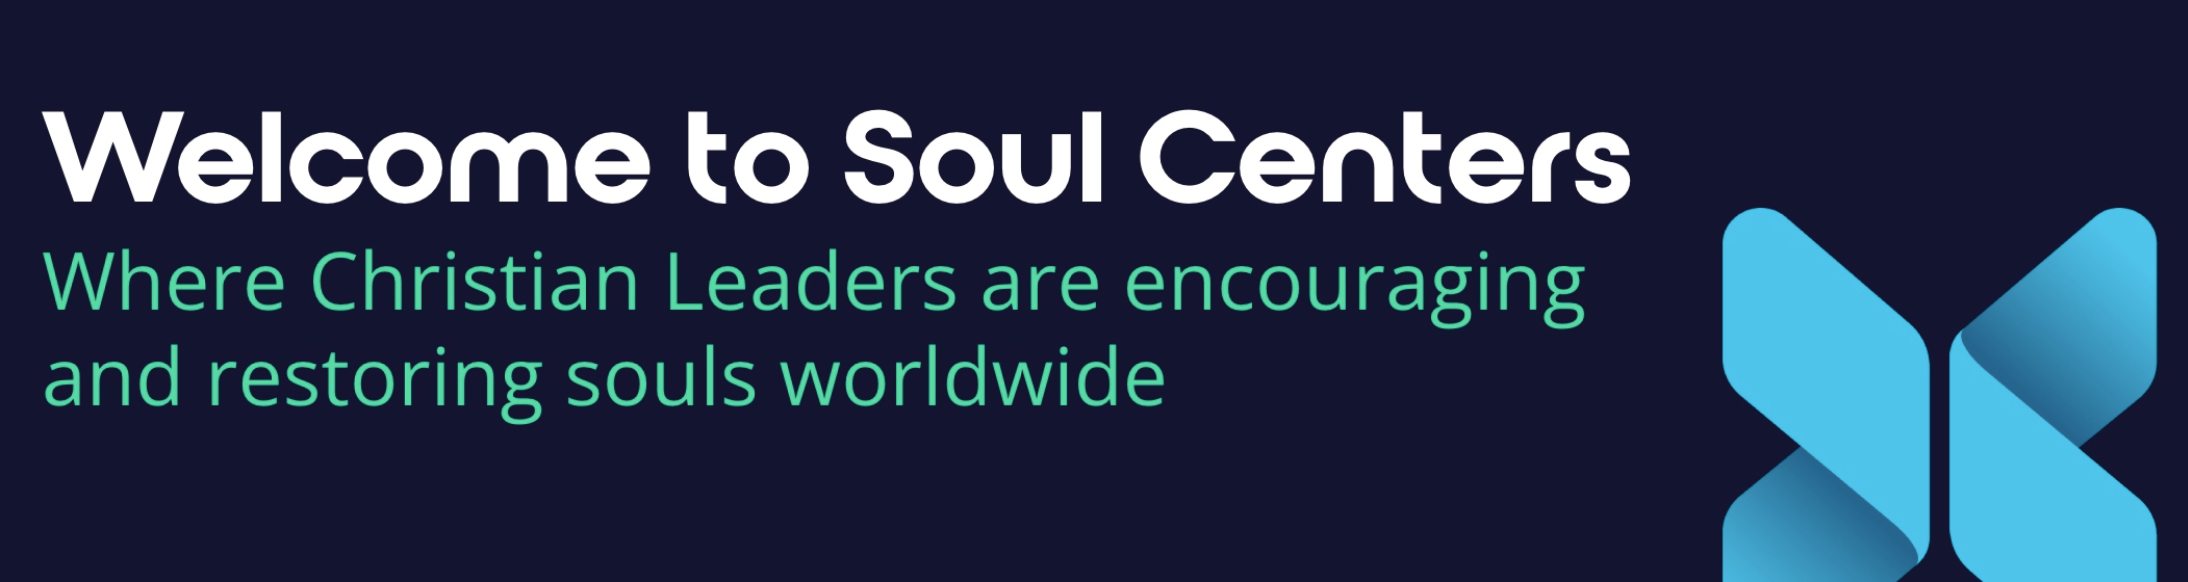 Soul Centers Banner